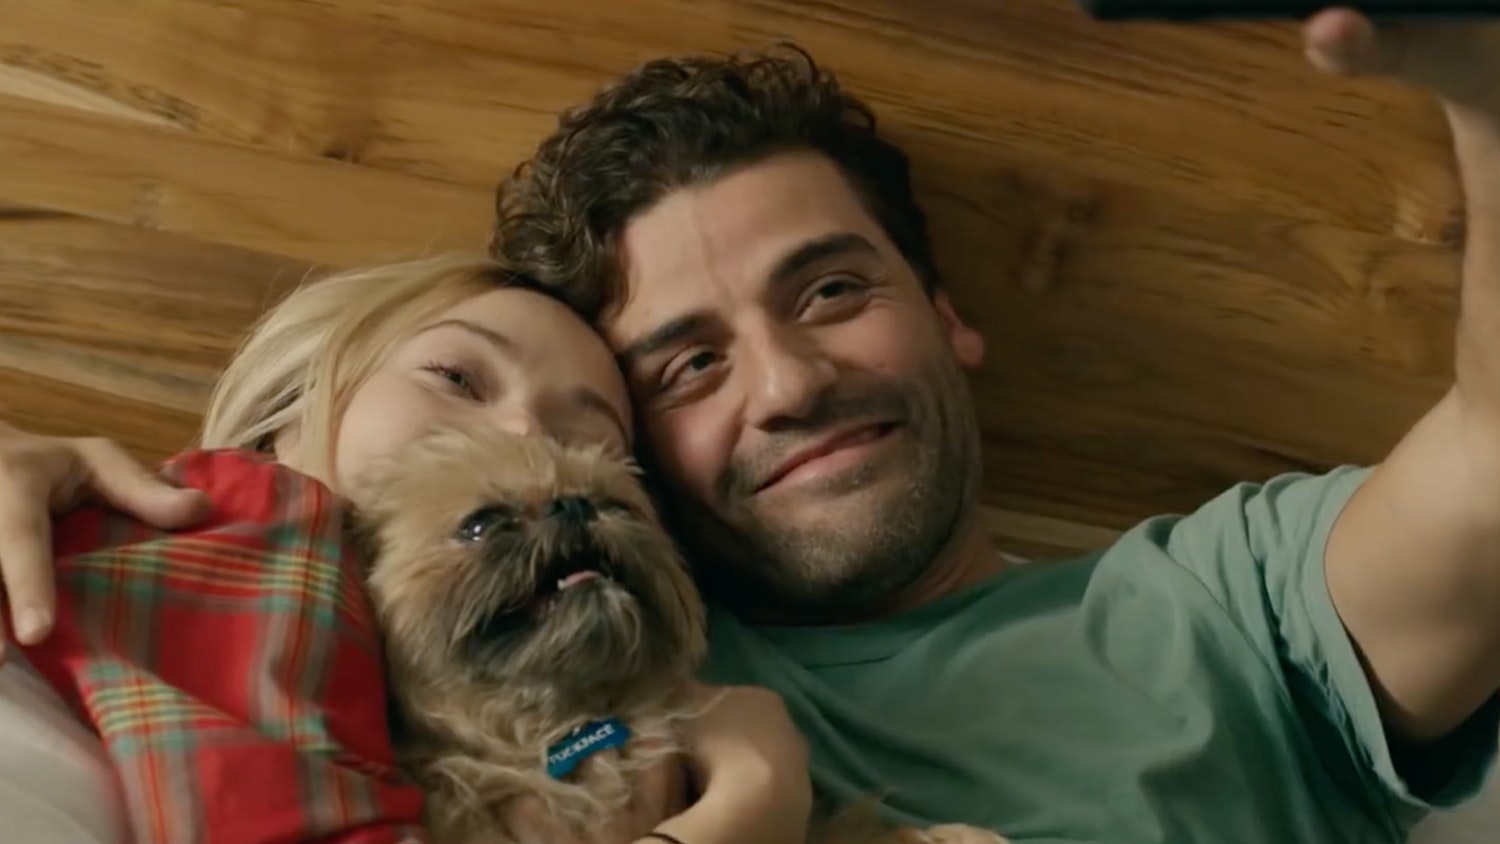 Movie review: “Crazy, Stupid, Love” a multigenerational romantic